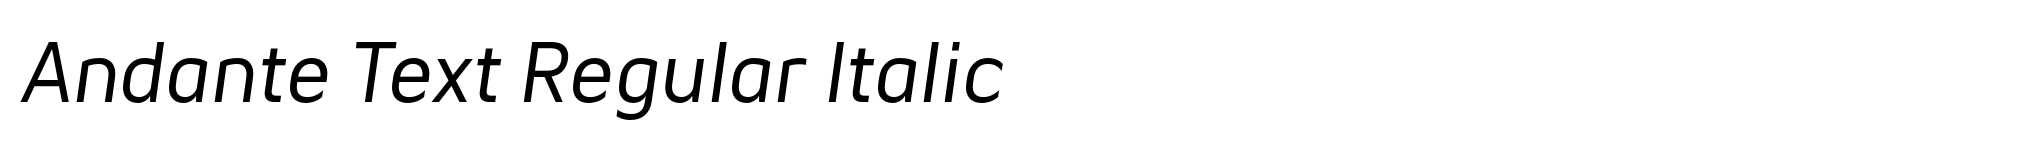 Andante Text Regular Italic image